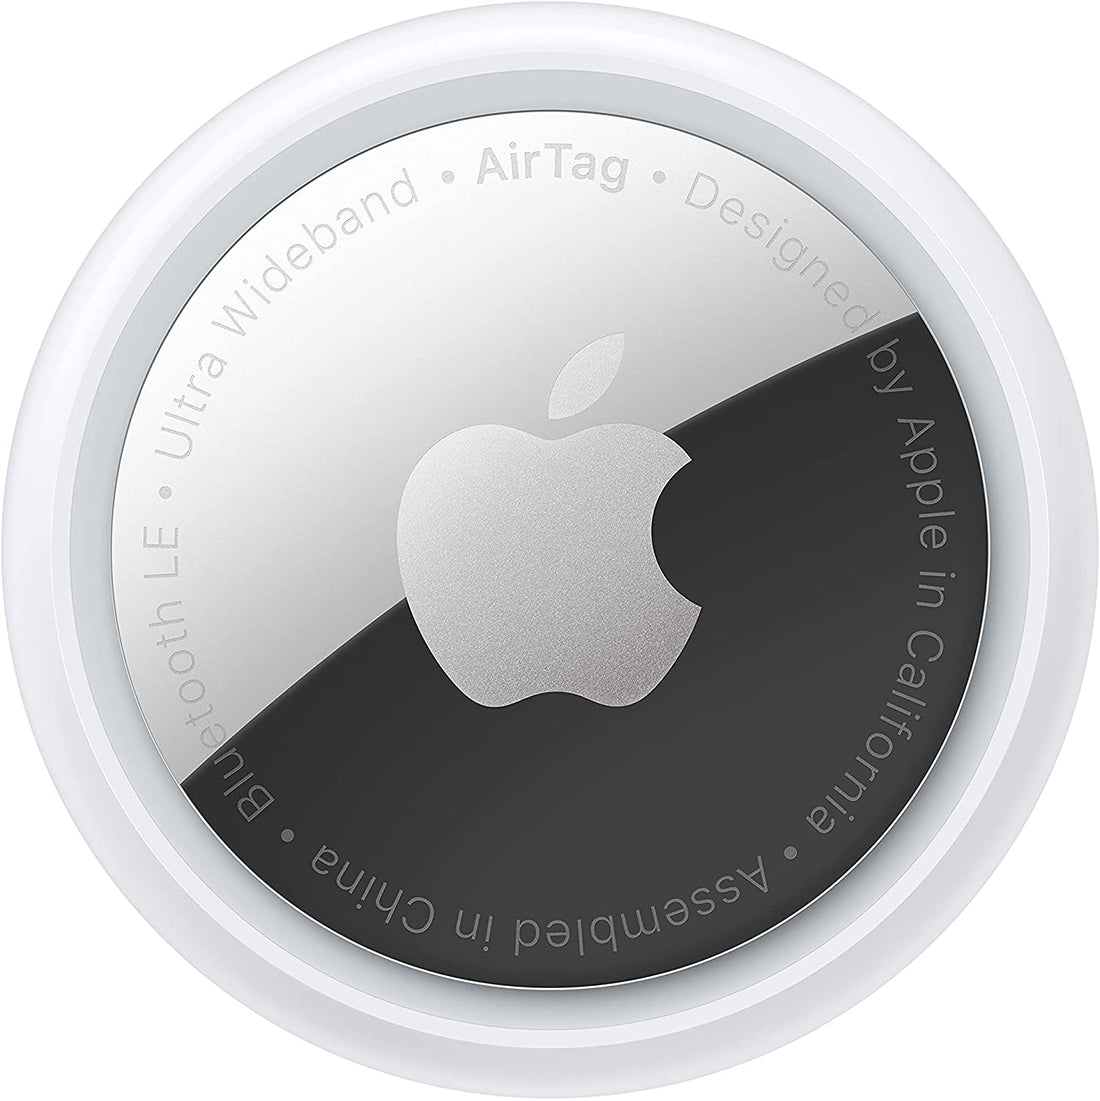 Apple AirTag Tracker 1-Pack, MX532AM/A - White (New)